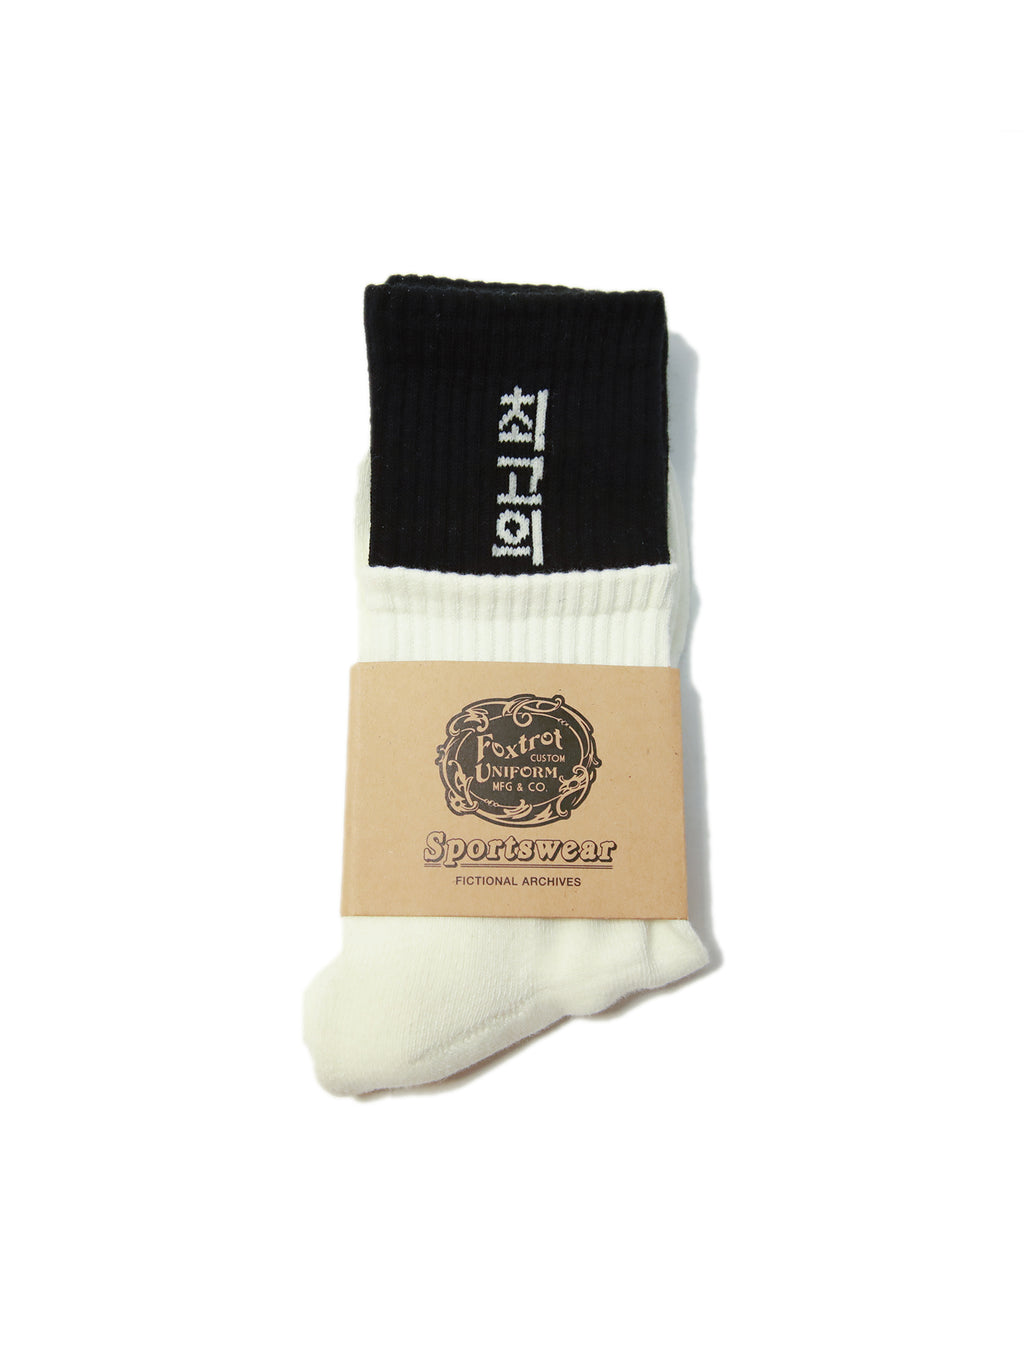 Horizontal half white and black Socks for Sale by JayArtShop